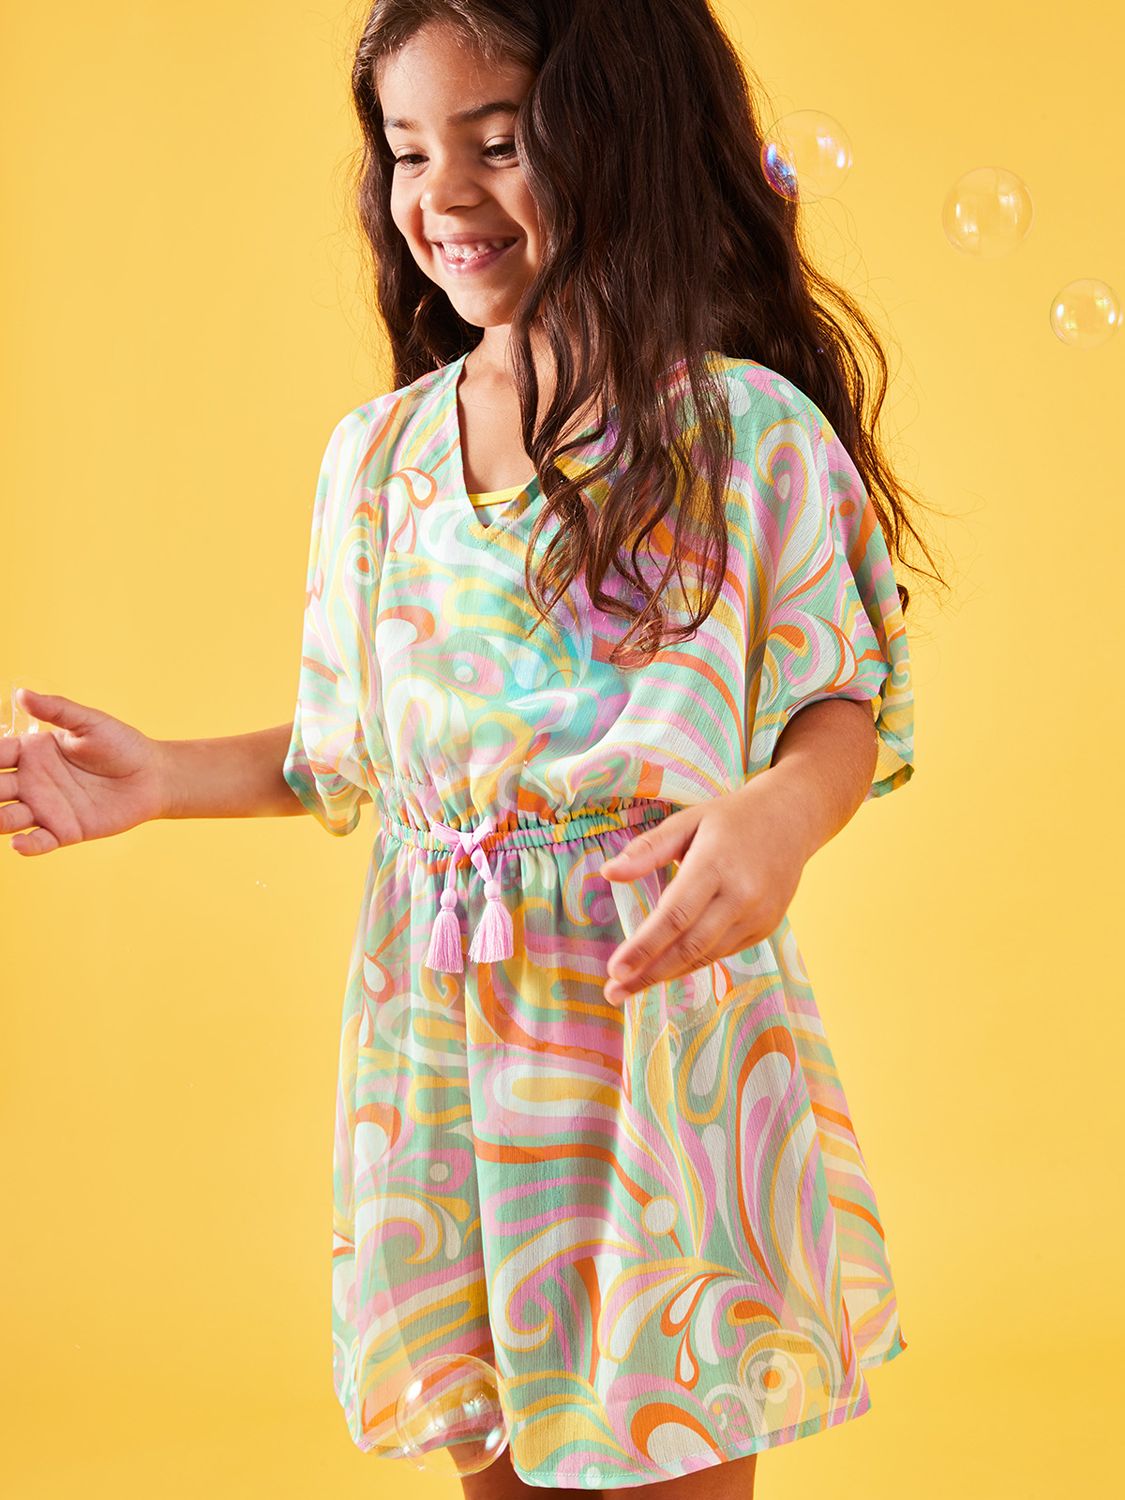 Accessorize Kids' Swirl Dress, Multi, 3-4 years